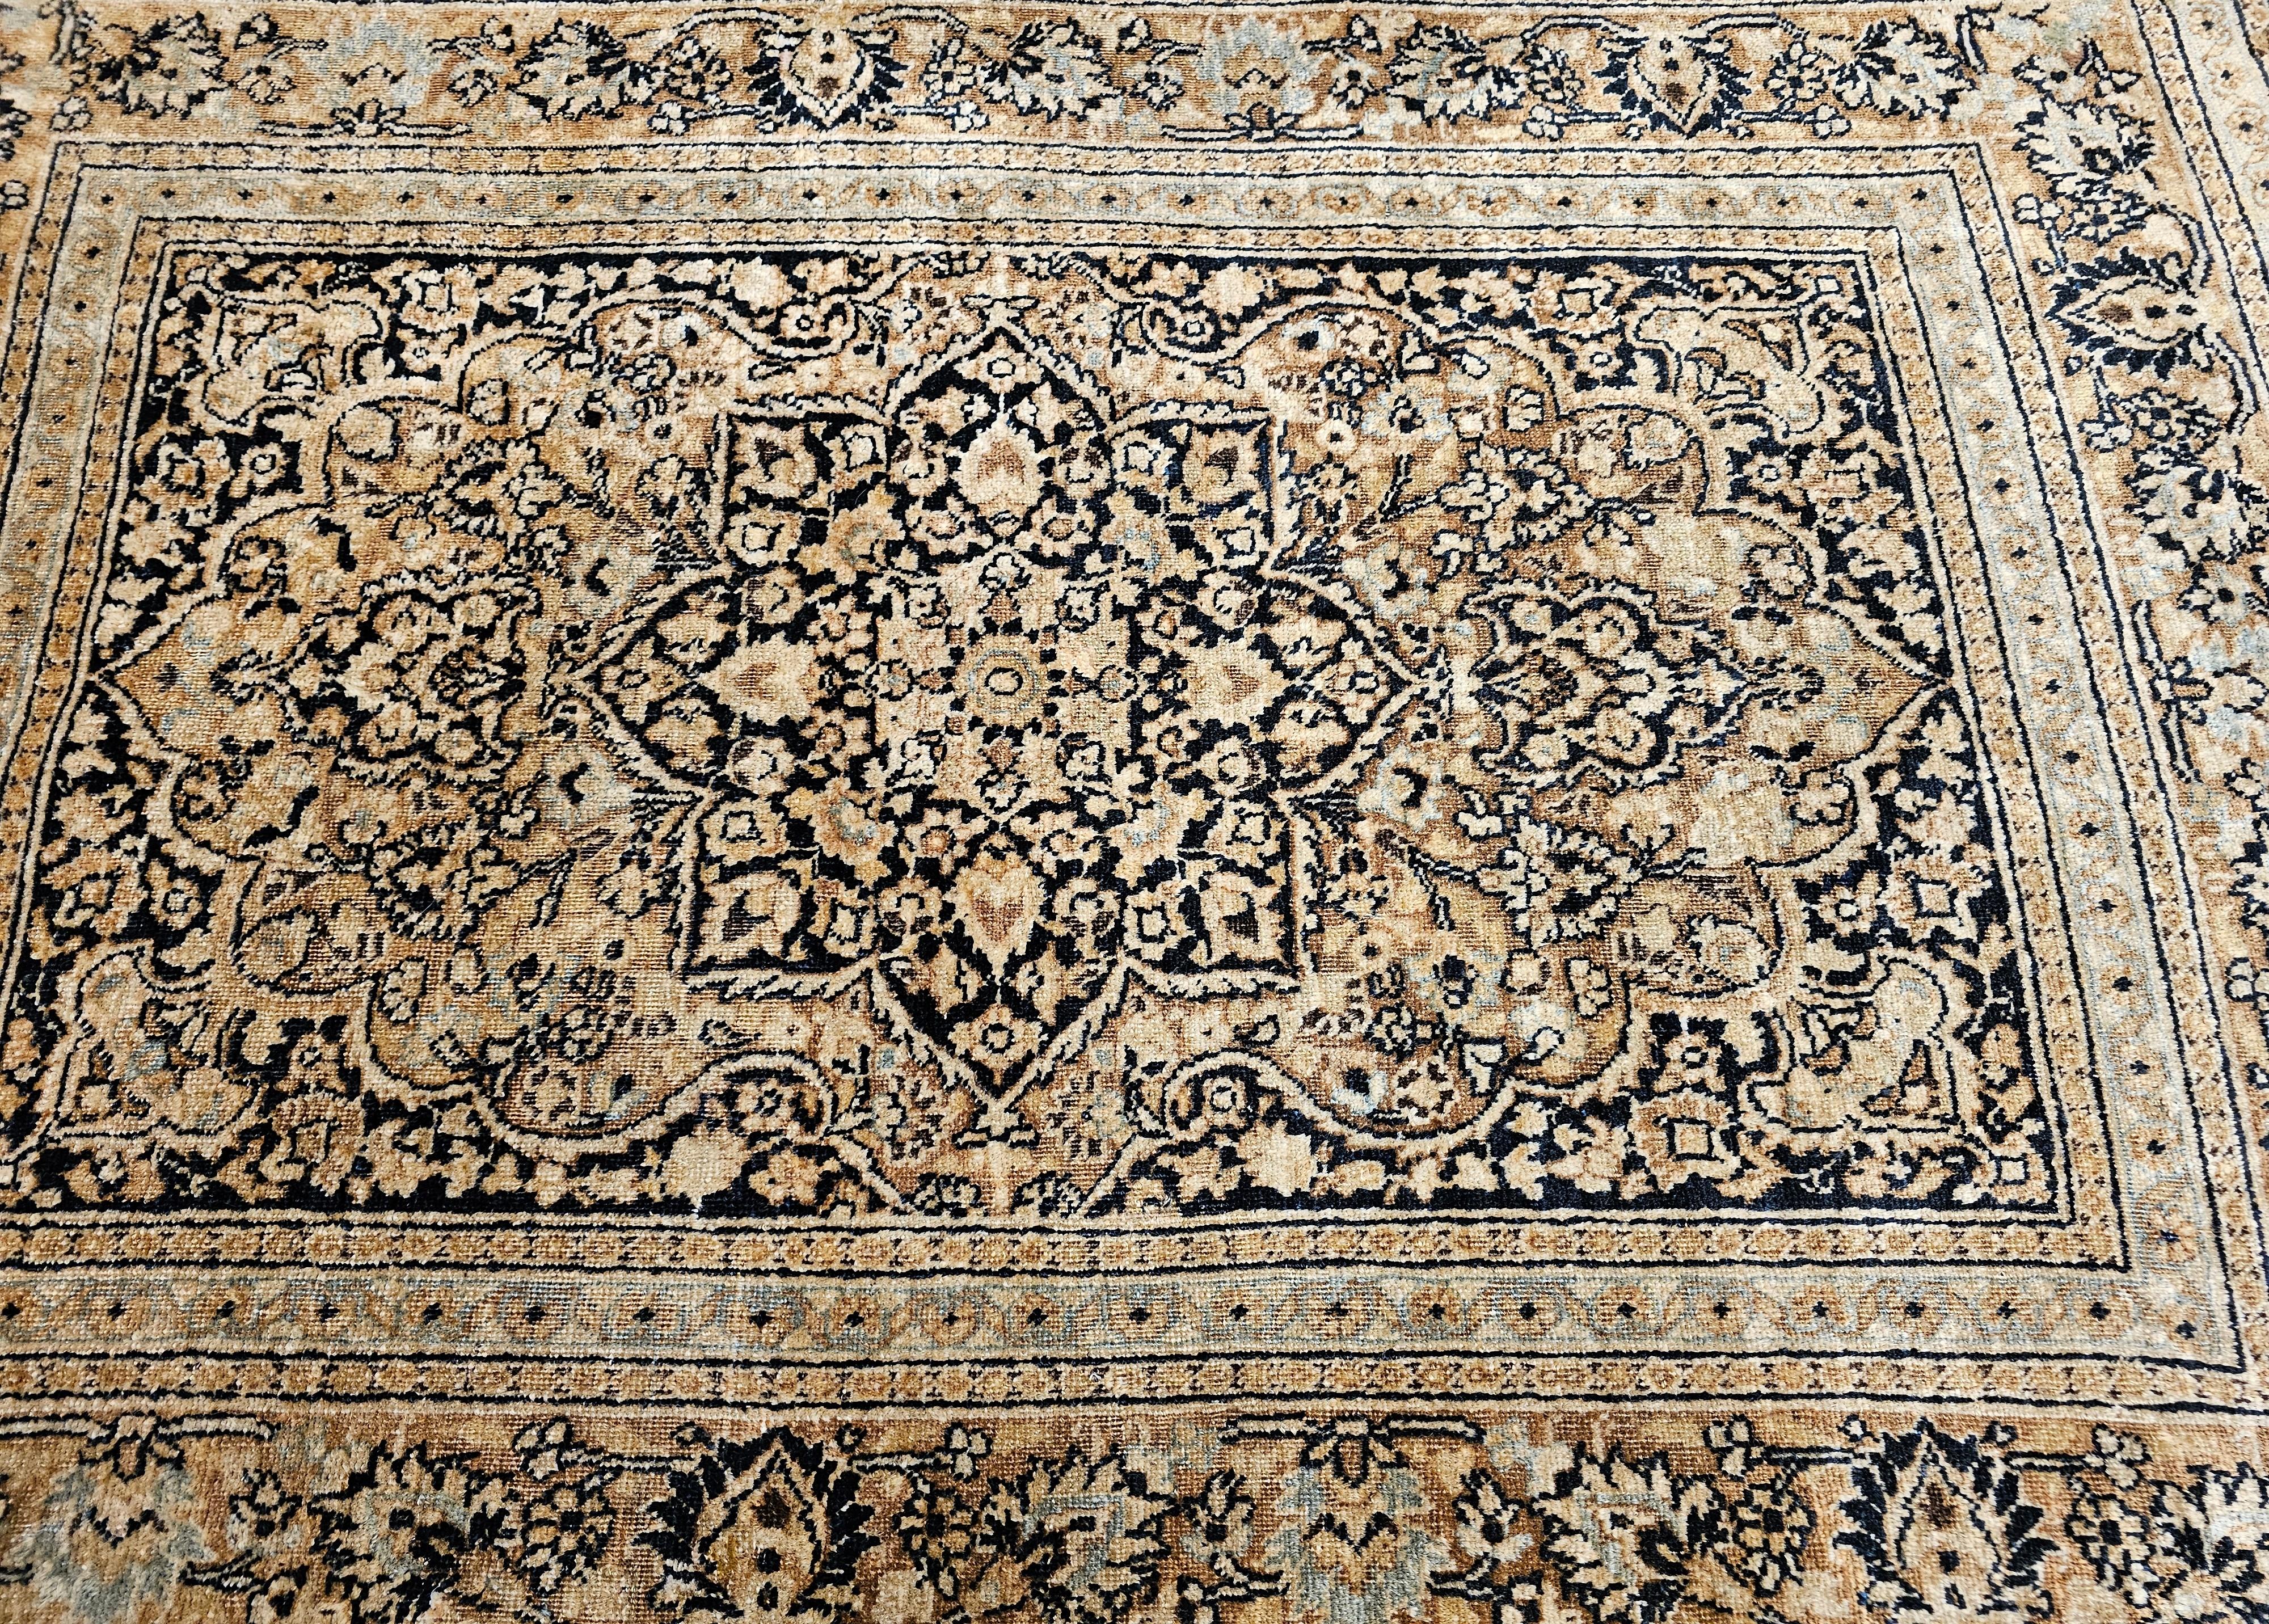 Hand-Knotted Vintage Persian Tabriz in Allover Floral Pattern in Dark Navy/Black, Gold, Blue